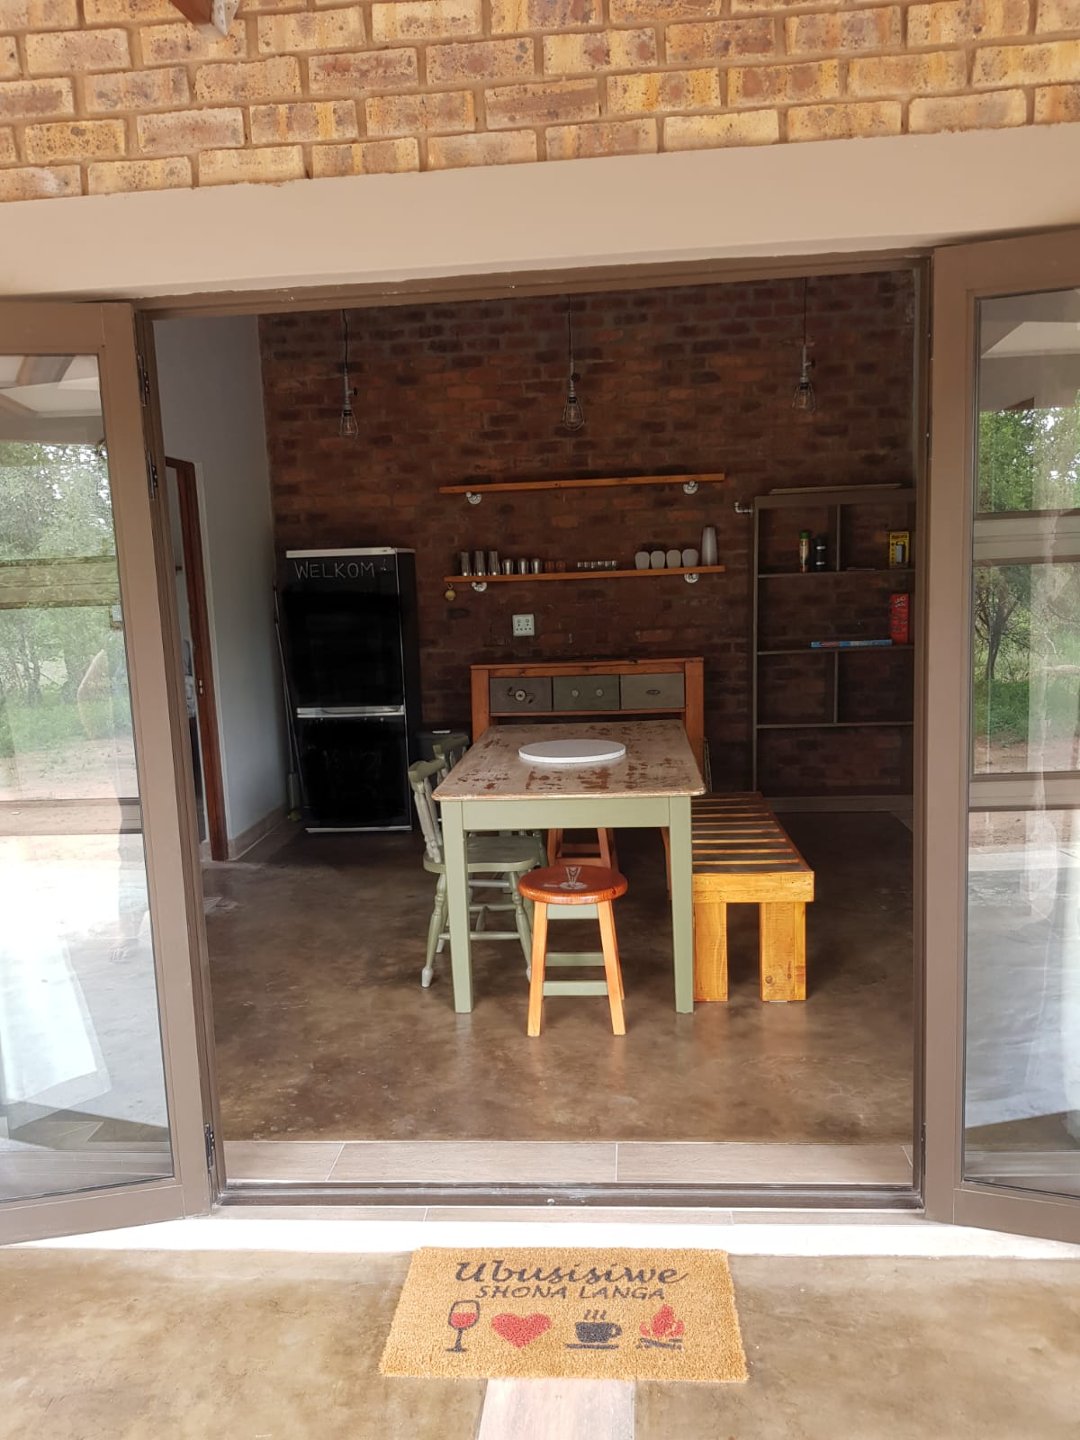 5 Bedroom Property for Sale in Shona Langa Limpopo